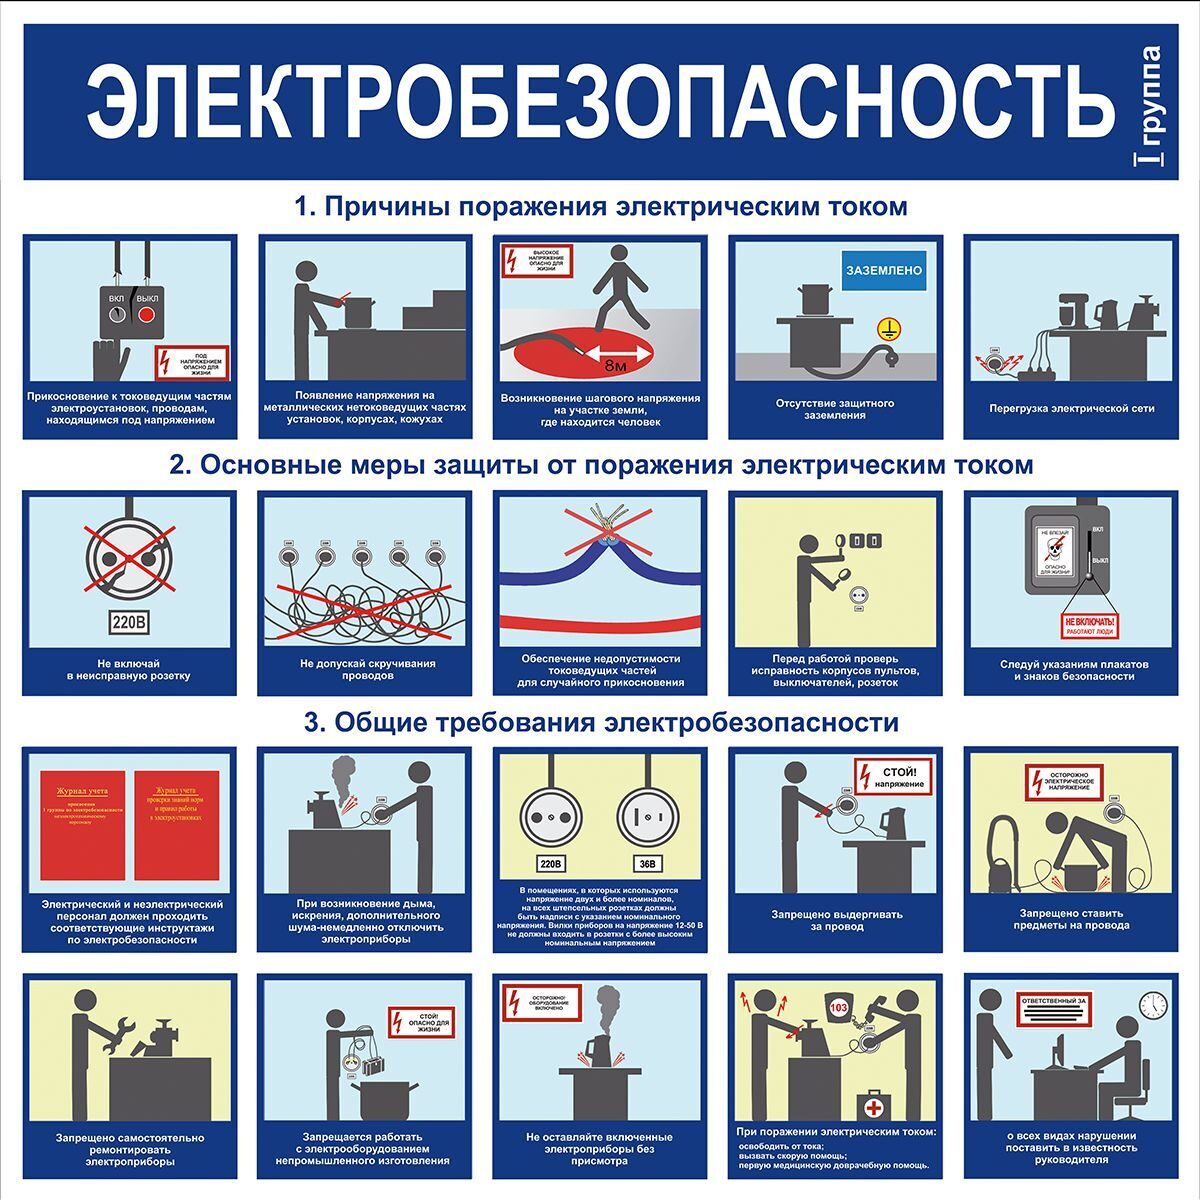 Электробезопасность 2 группа до 1000 atelectro ru. Стенд по охране труда электробезопасность в электроустановках. Правила безопасности работы с электрическим током. Плакат «электробезопасность». Э̆̈л̆̈ӗ̈к̆̈т̆̈р̆̈о̆̈ б̆̈ӗ̈з̆̈о̆̈п̆̈ӑ̈с̆̈н̆̈о̆̈с̆̈т̆̈ь̆̈.